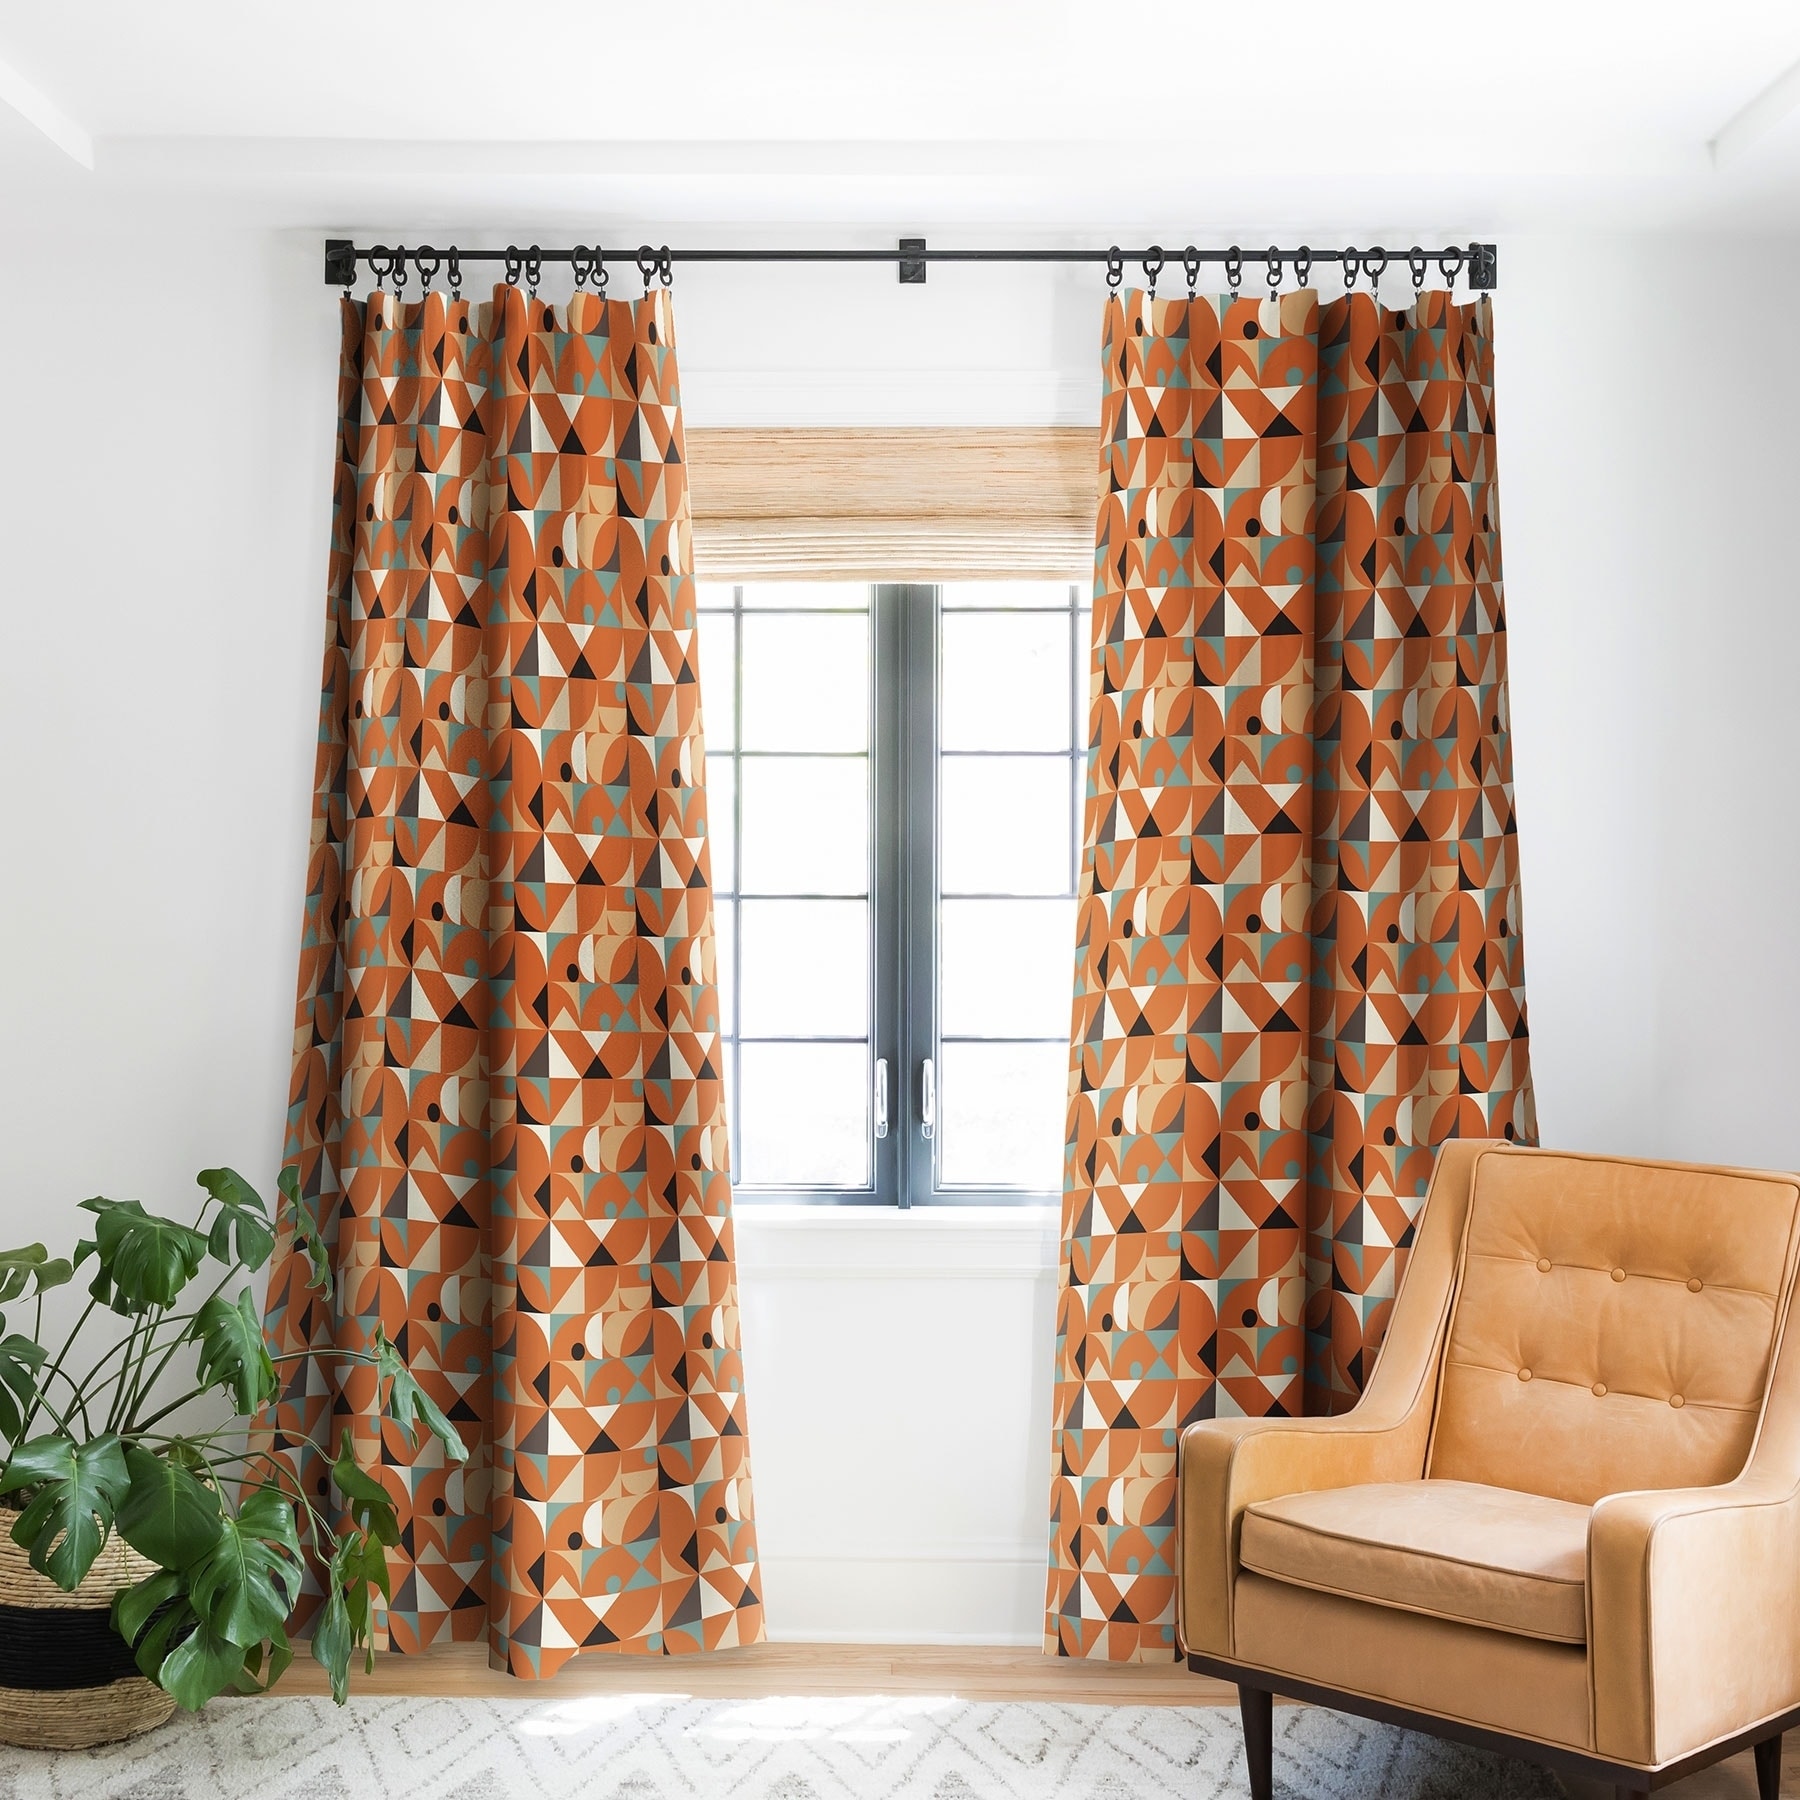 Deny Designs Mid Century Orange Blackout Curtain Panel 2 Size Options On Sale Overstock 28313479